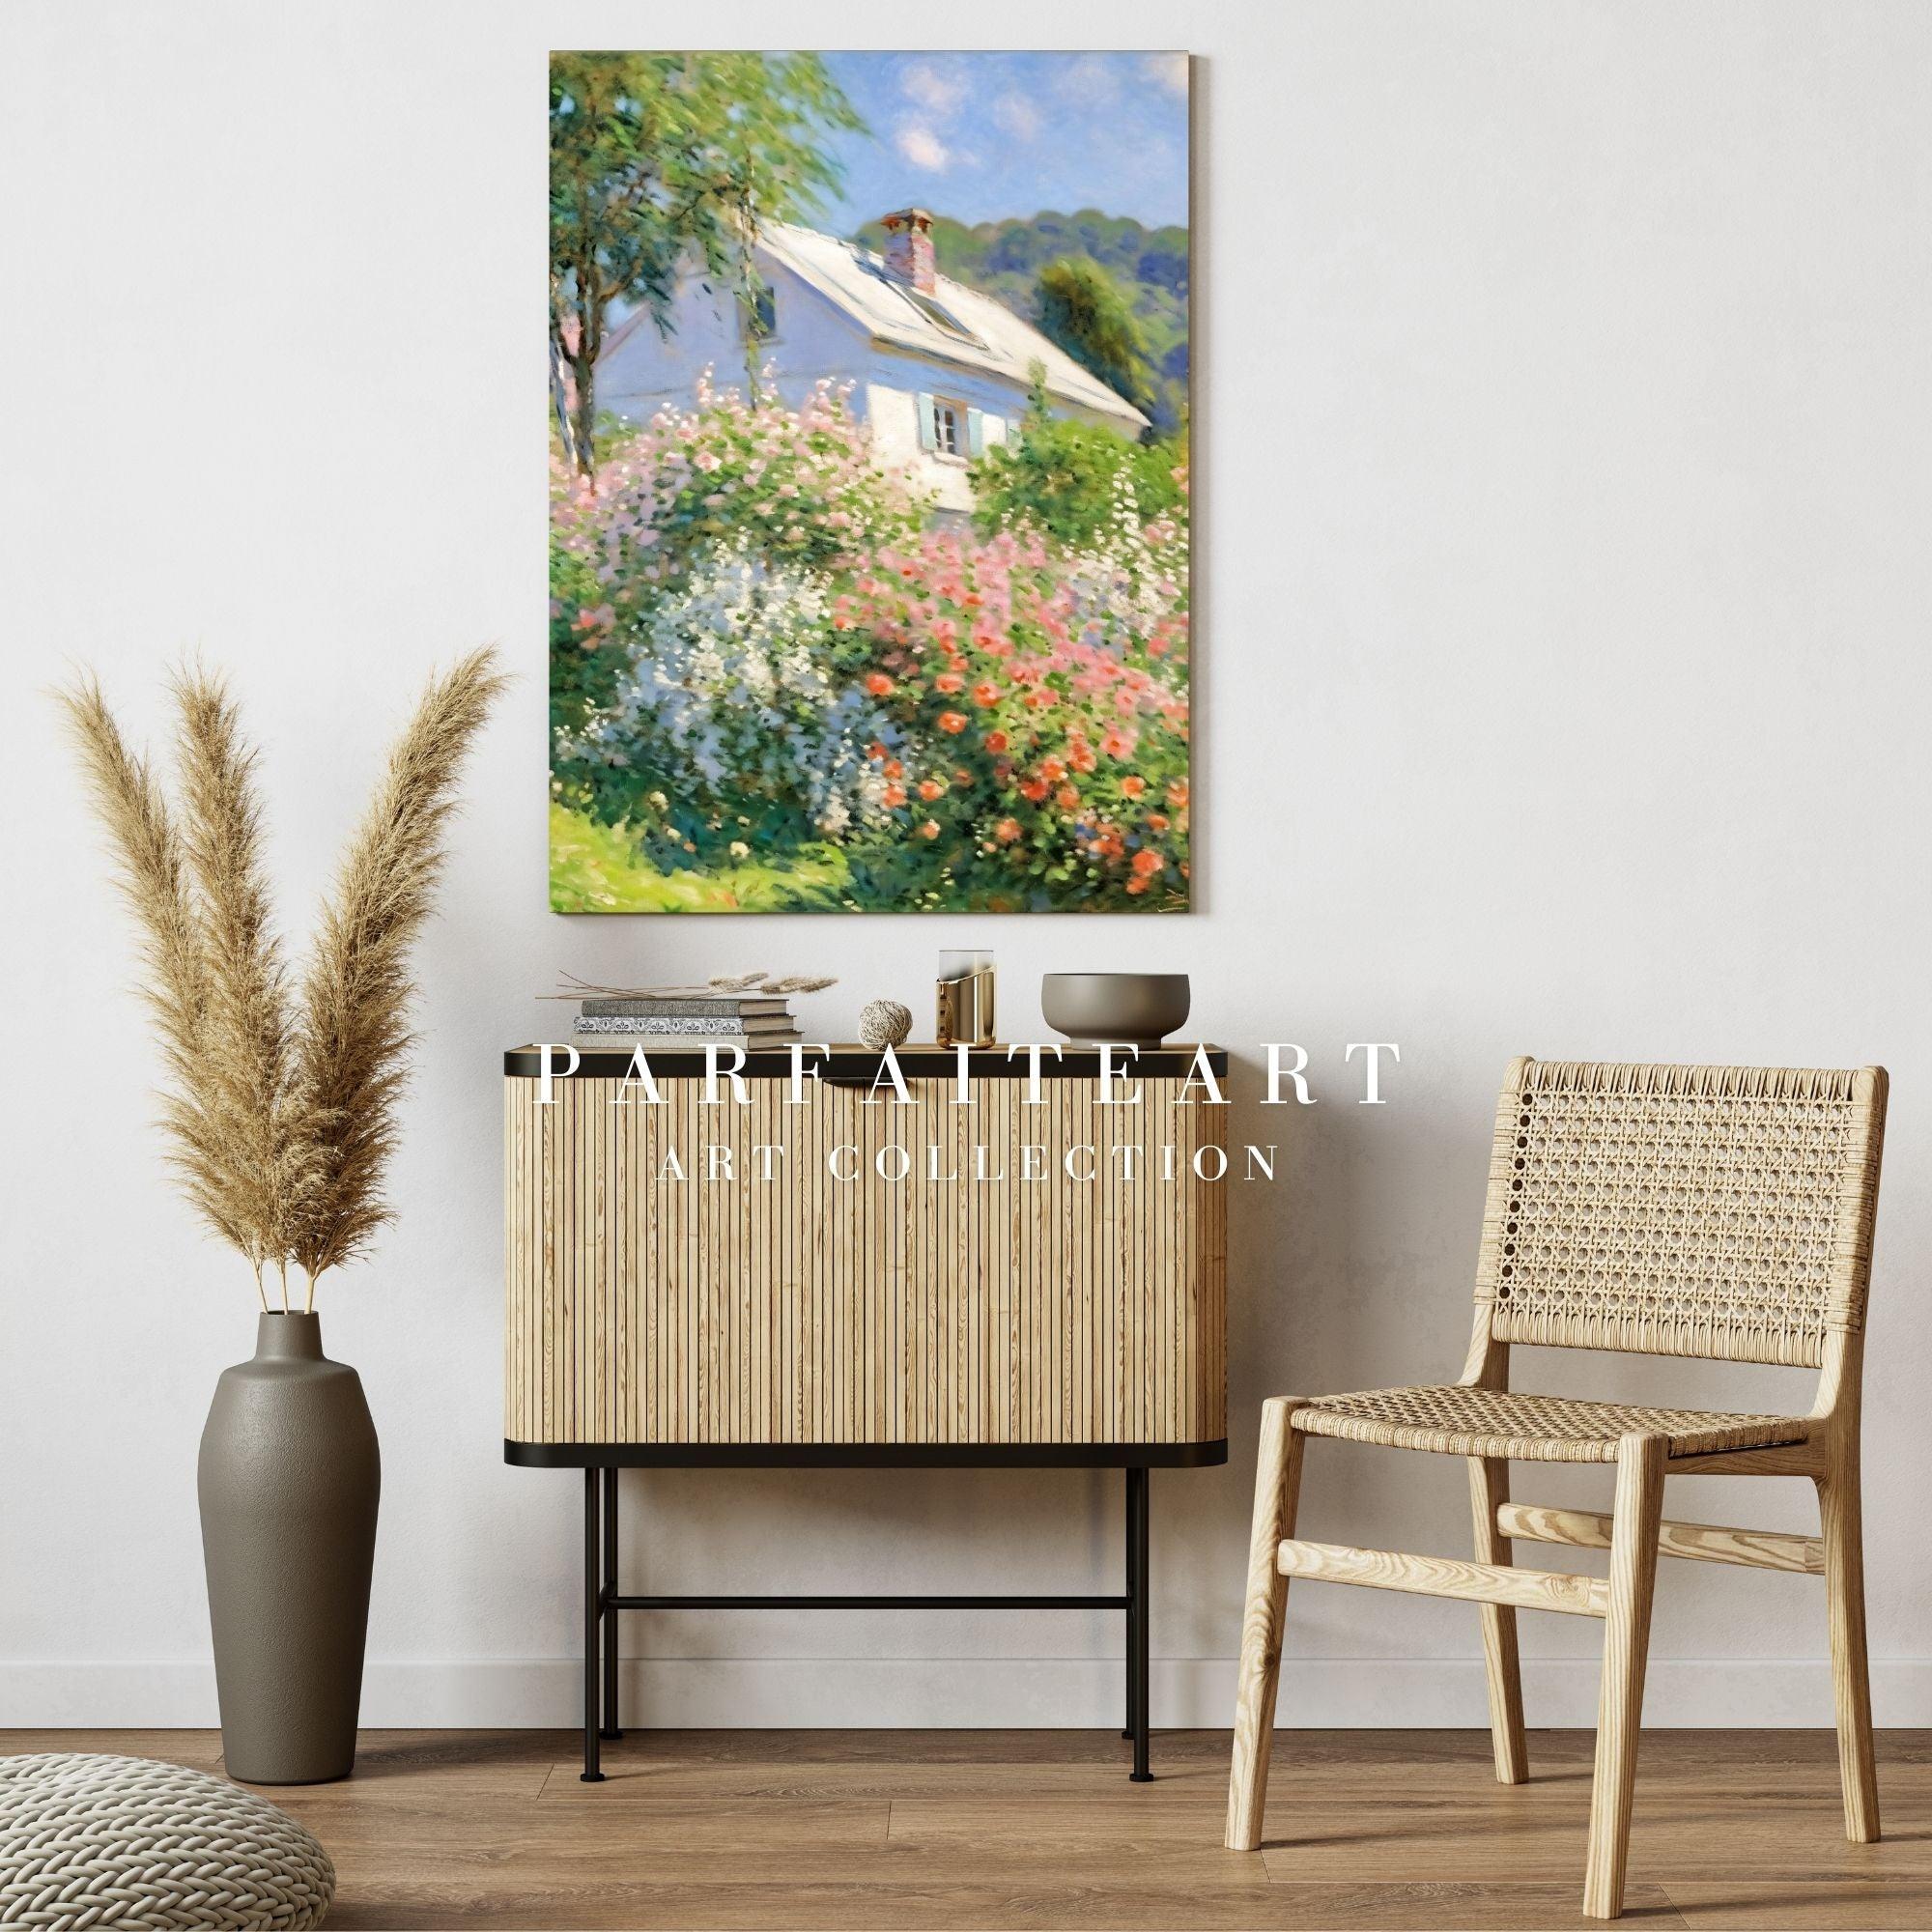 Impressionism,Wall art,Canvas Prints,Home Decor,Framed IC 4 - ParfaiteArt